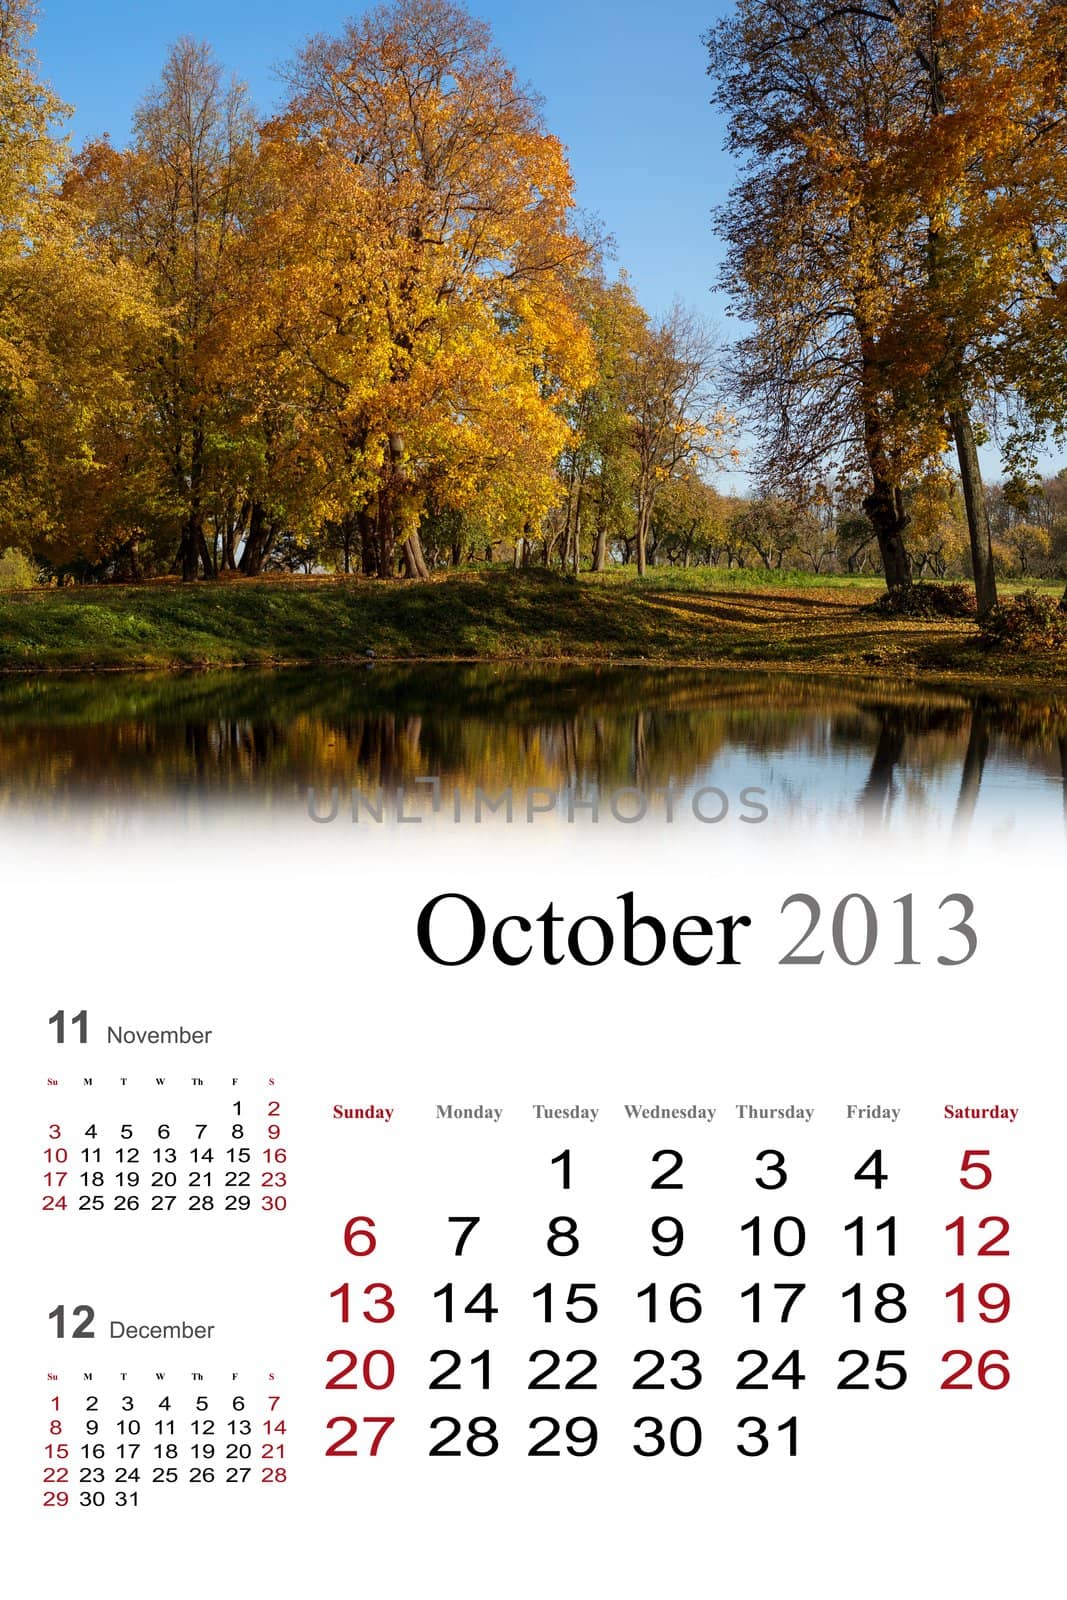 2013 Calendar. October. Golden autumn colors